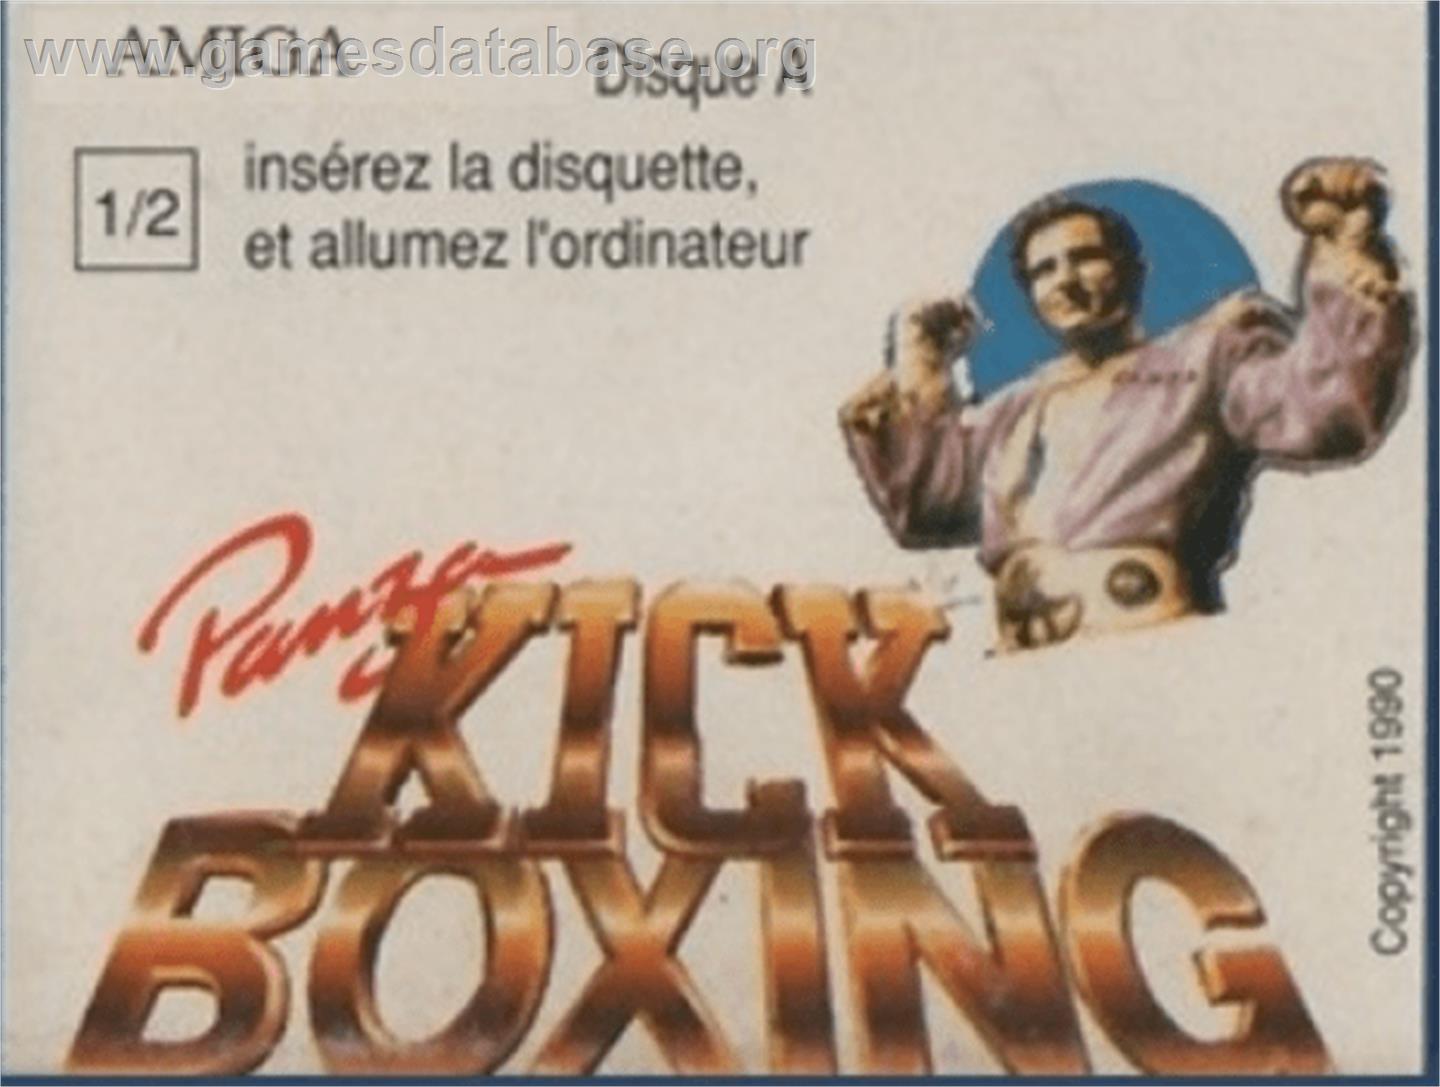 Panza Kick Boxing - Commodore Amiga - Artwork - Cartridge Top